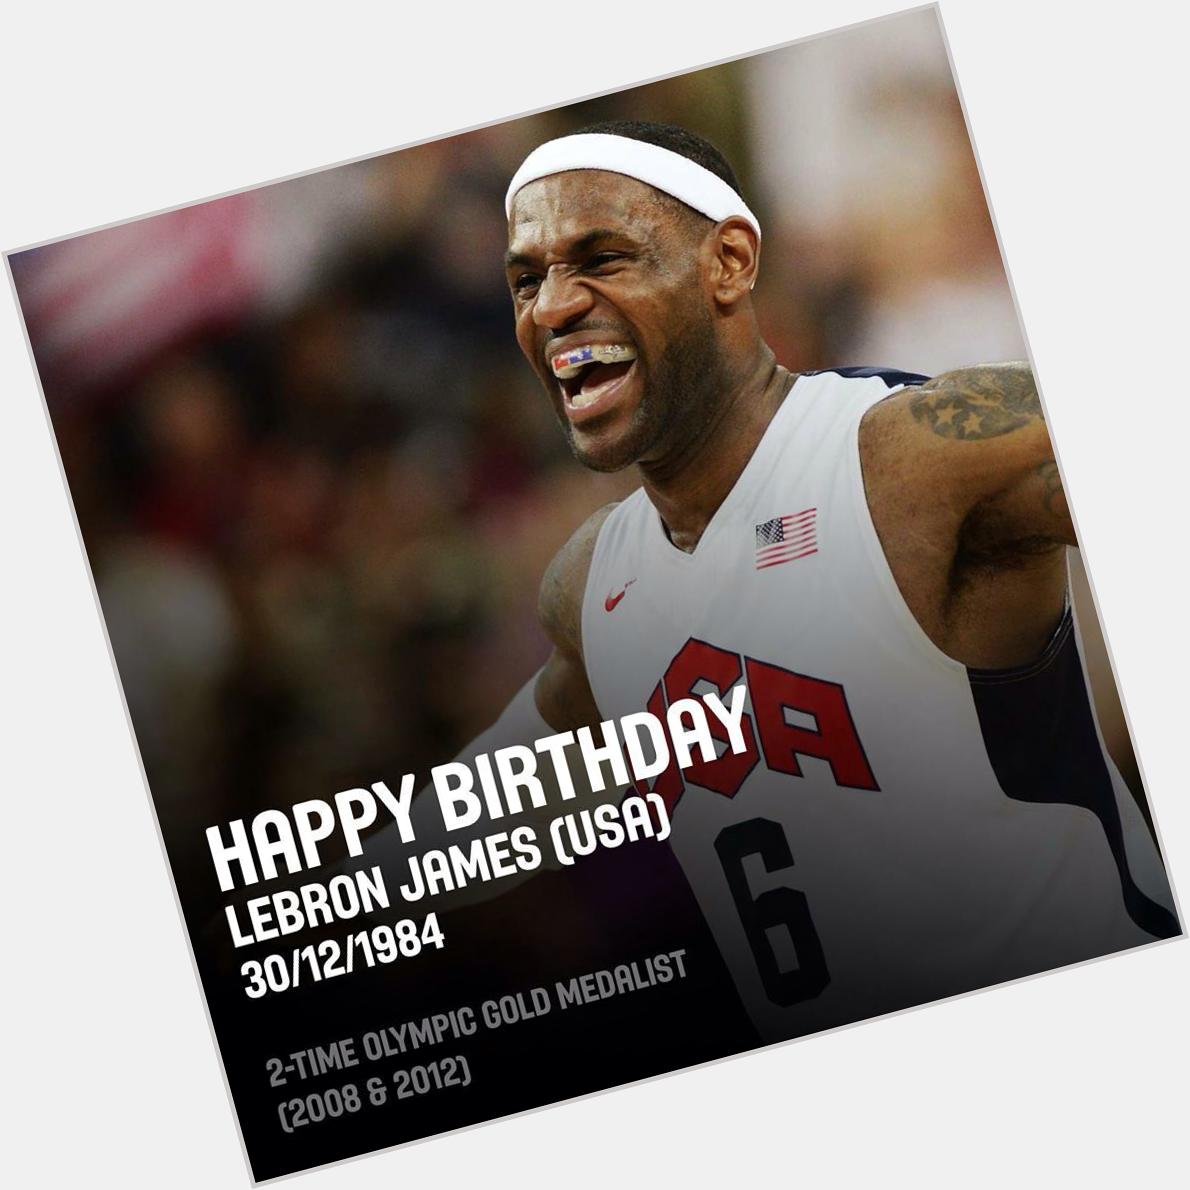   Happy birthday LeBron James!  Happy Birthday King James!